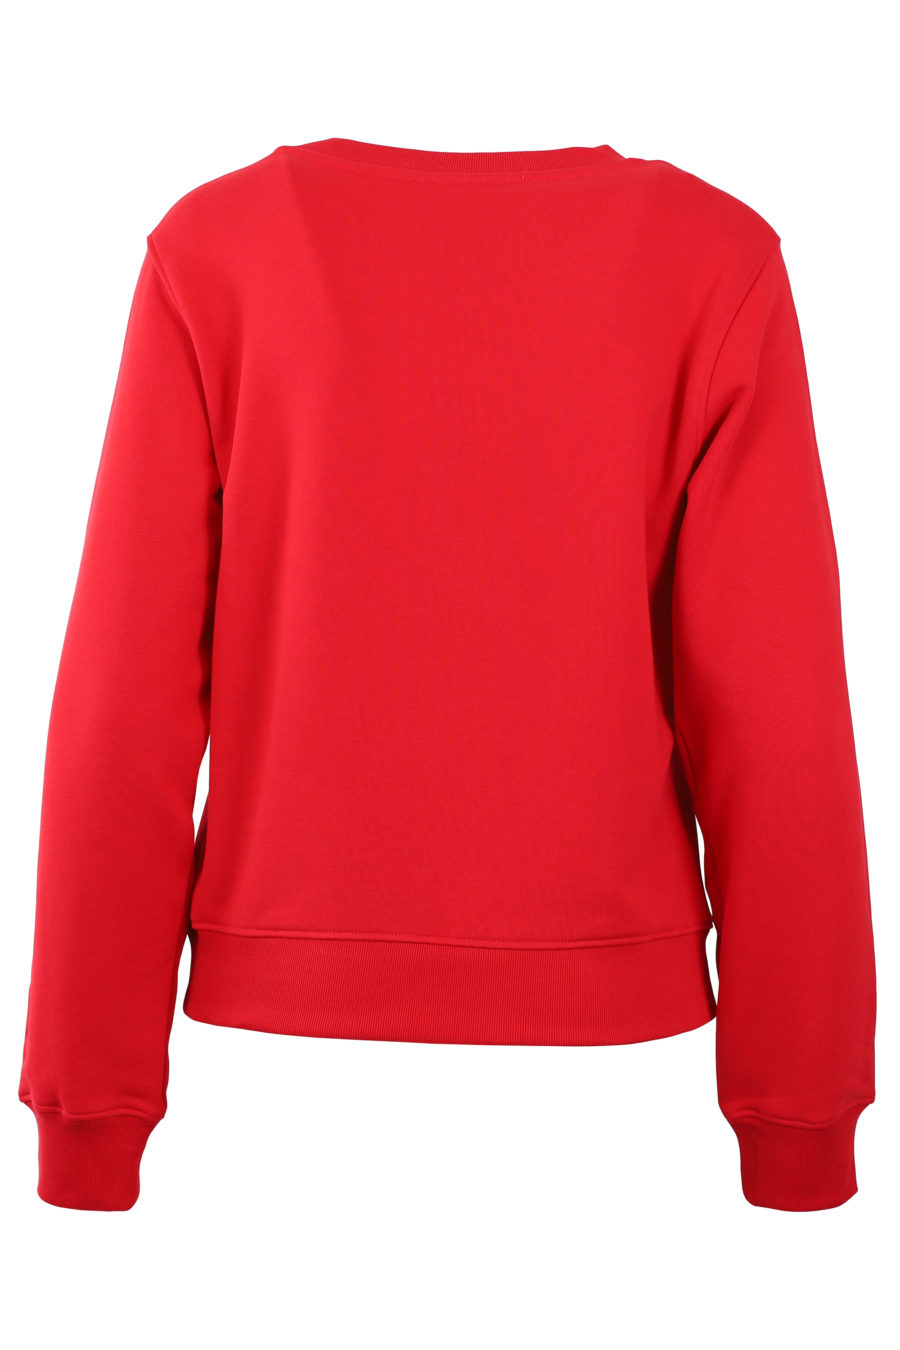 Red sweatshirt with black logo - IMG 9244